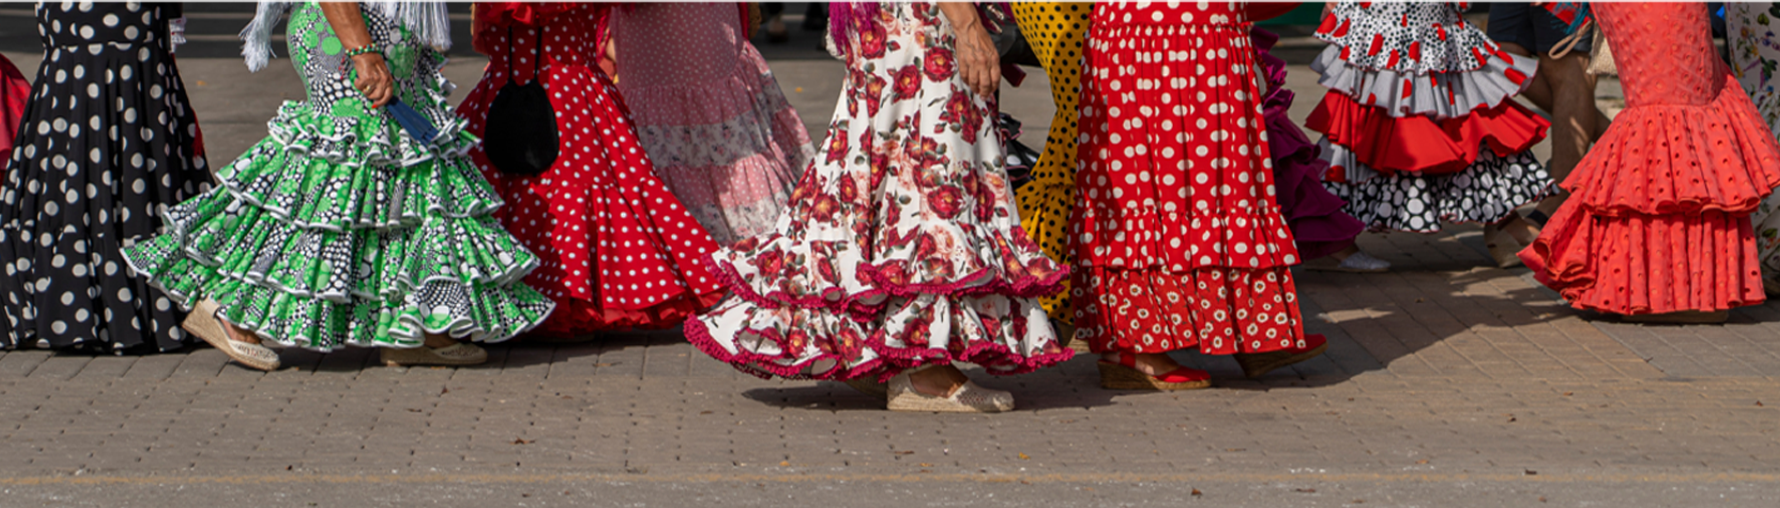 a group of women in polka dot dresses are walking down a sidewalk